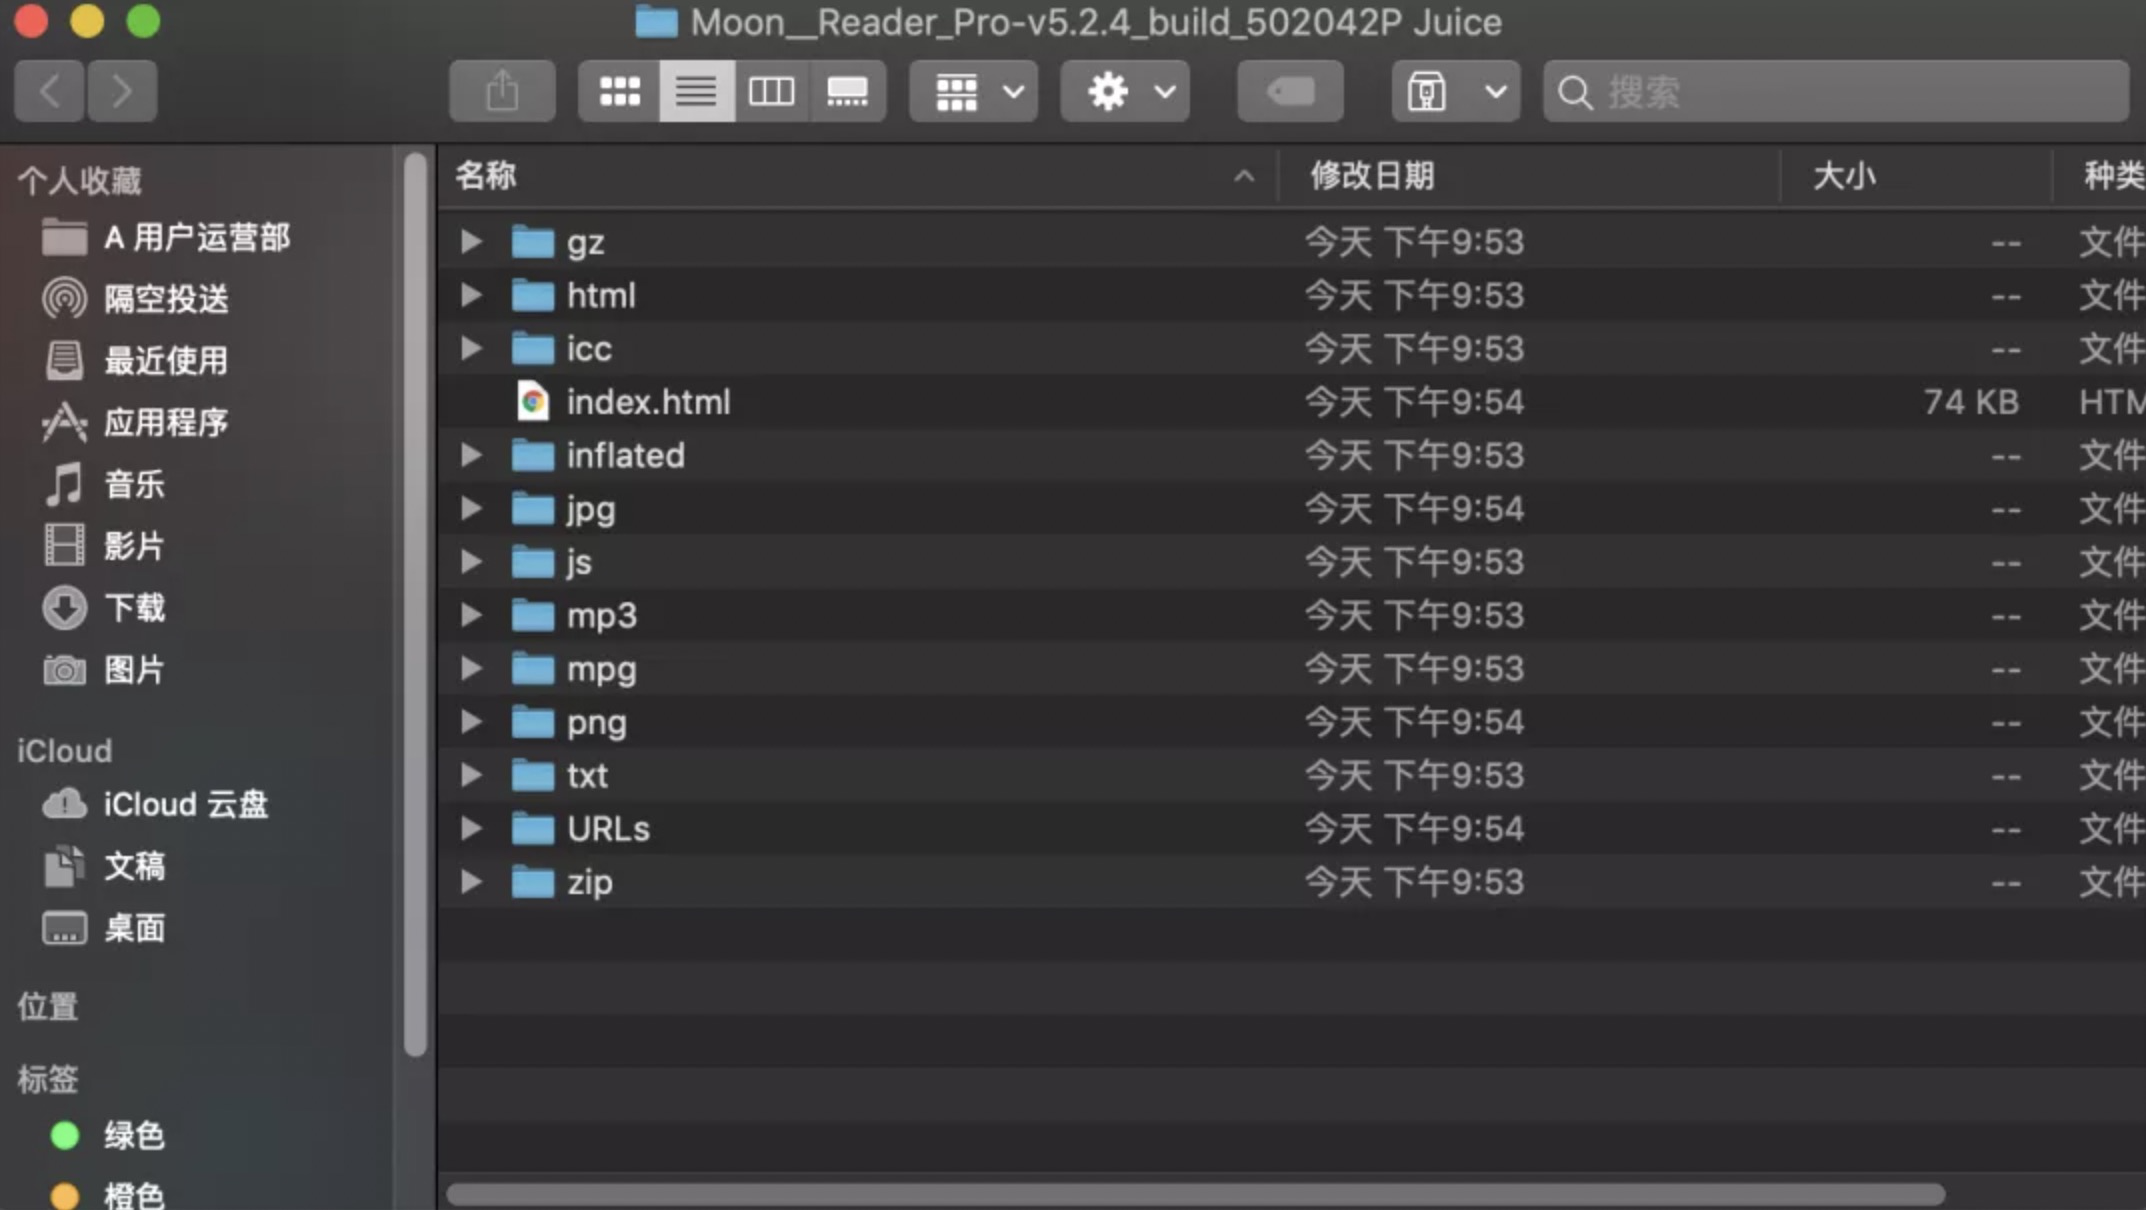 Mac版提取图片、视频、文本、声音的神器File Juicer[dmg,17MB,兼容BigSur]百度云网盘下载